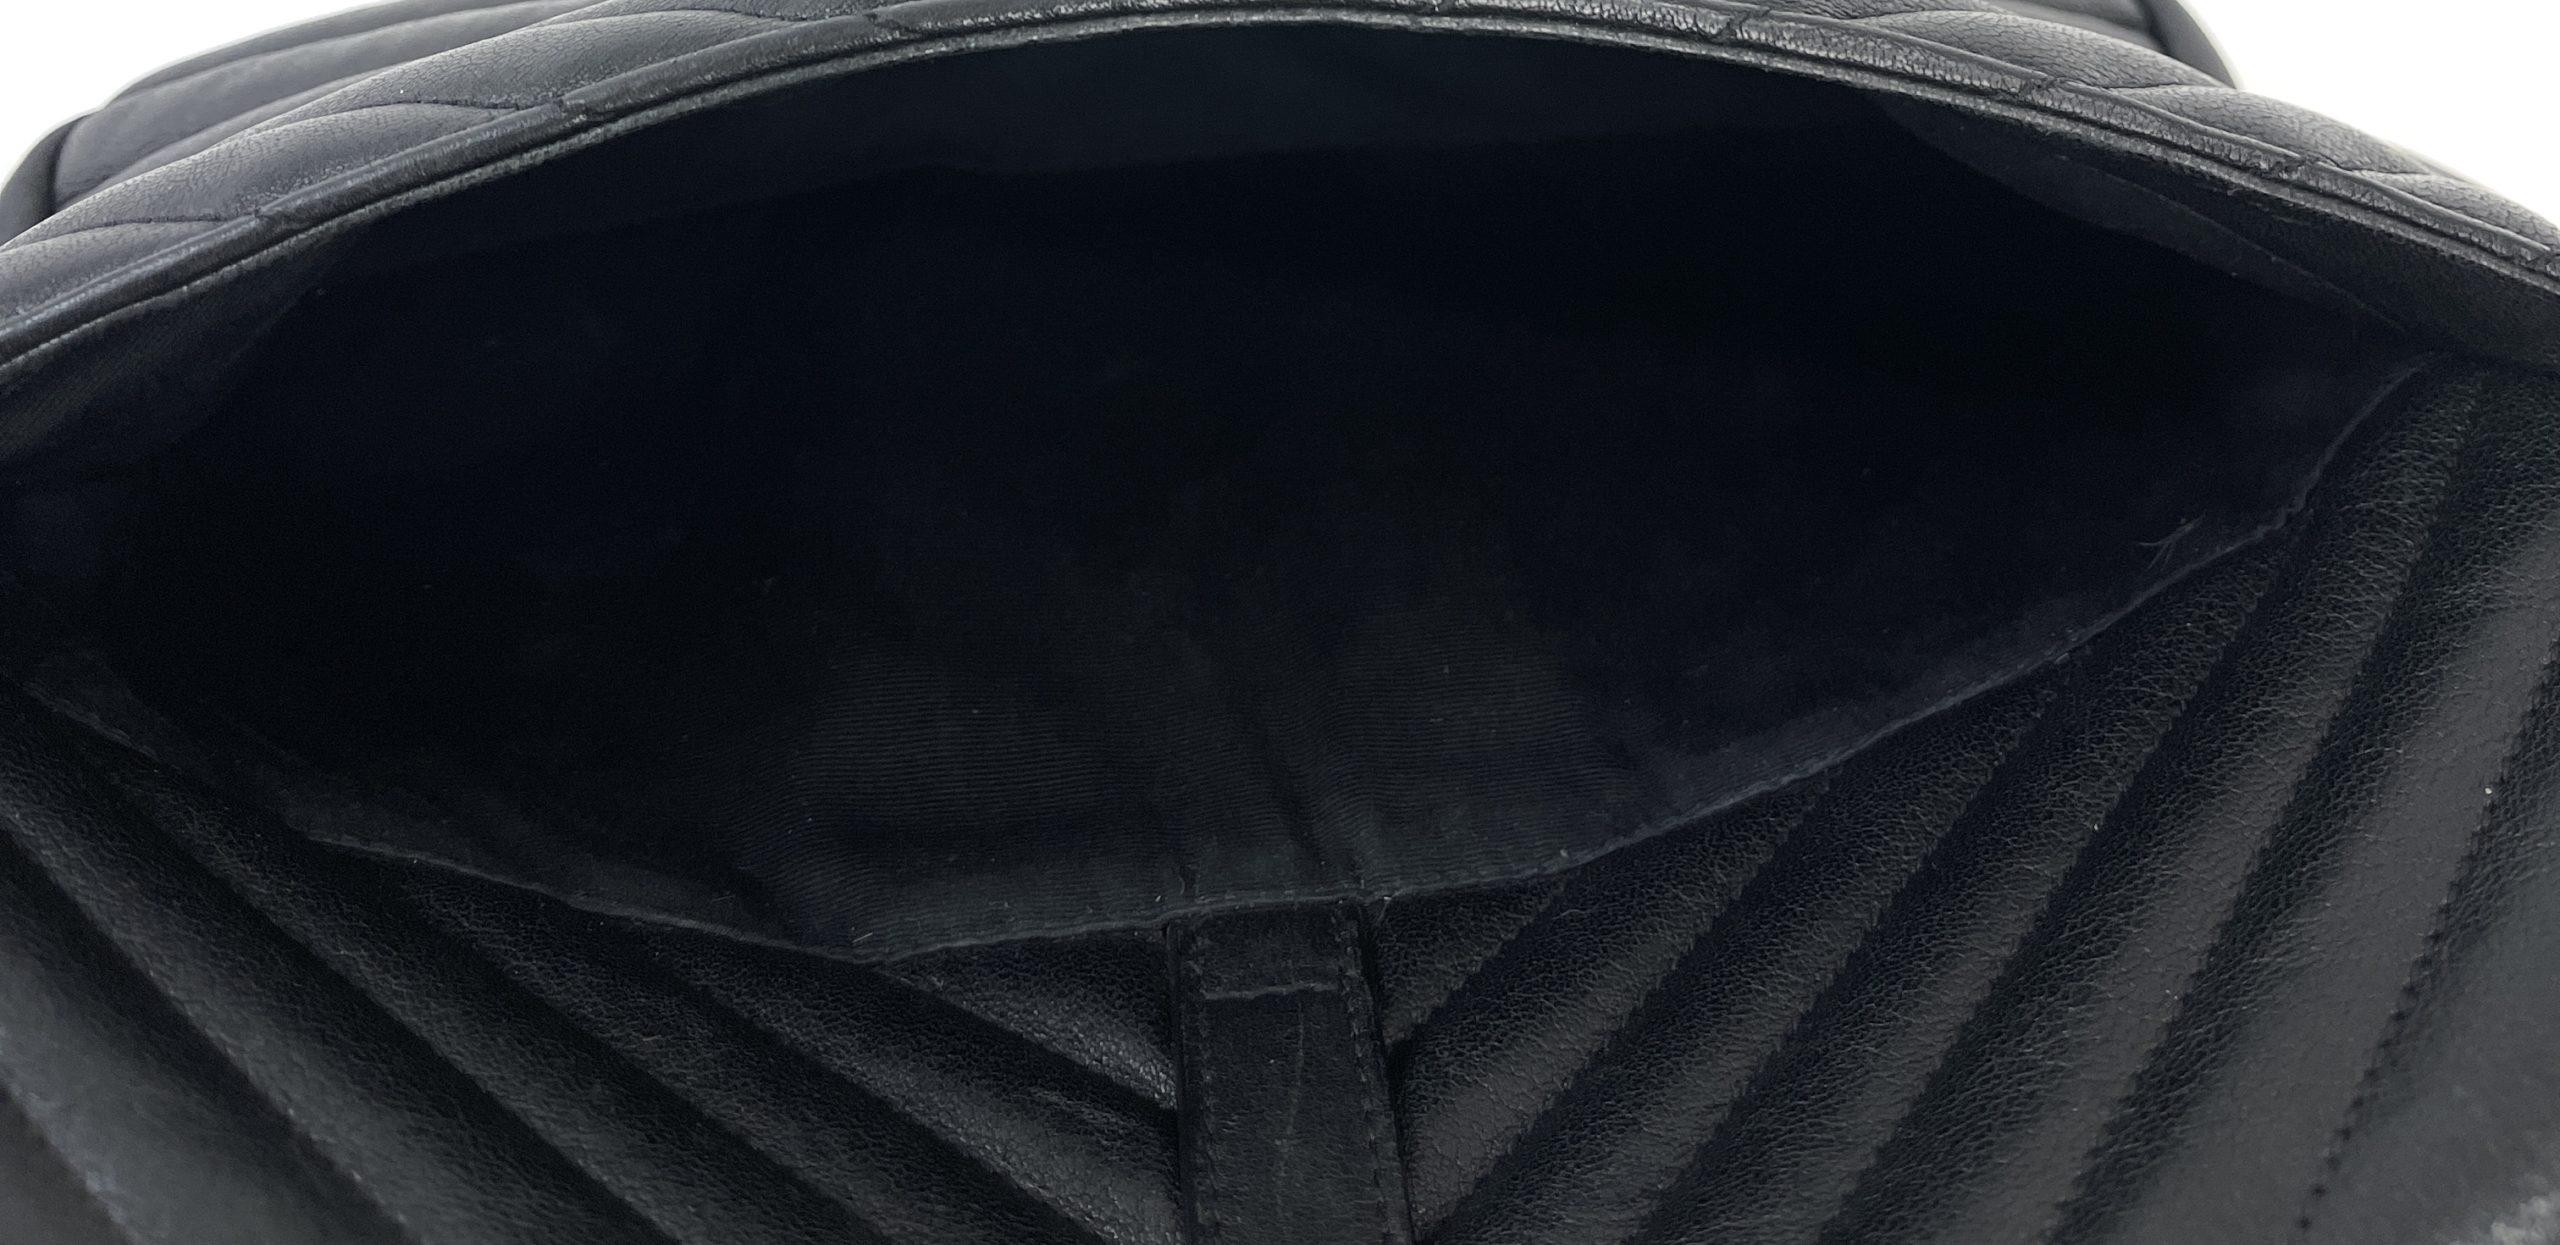 Saint Laurent Zip Quilted Leather Shoulder Bag